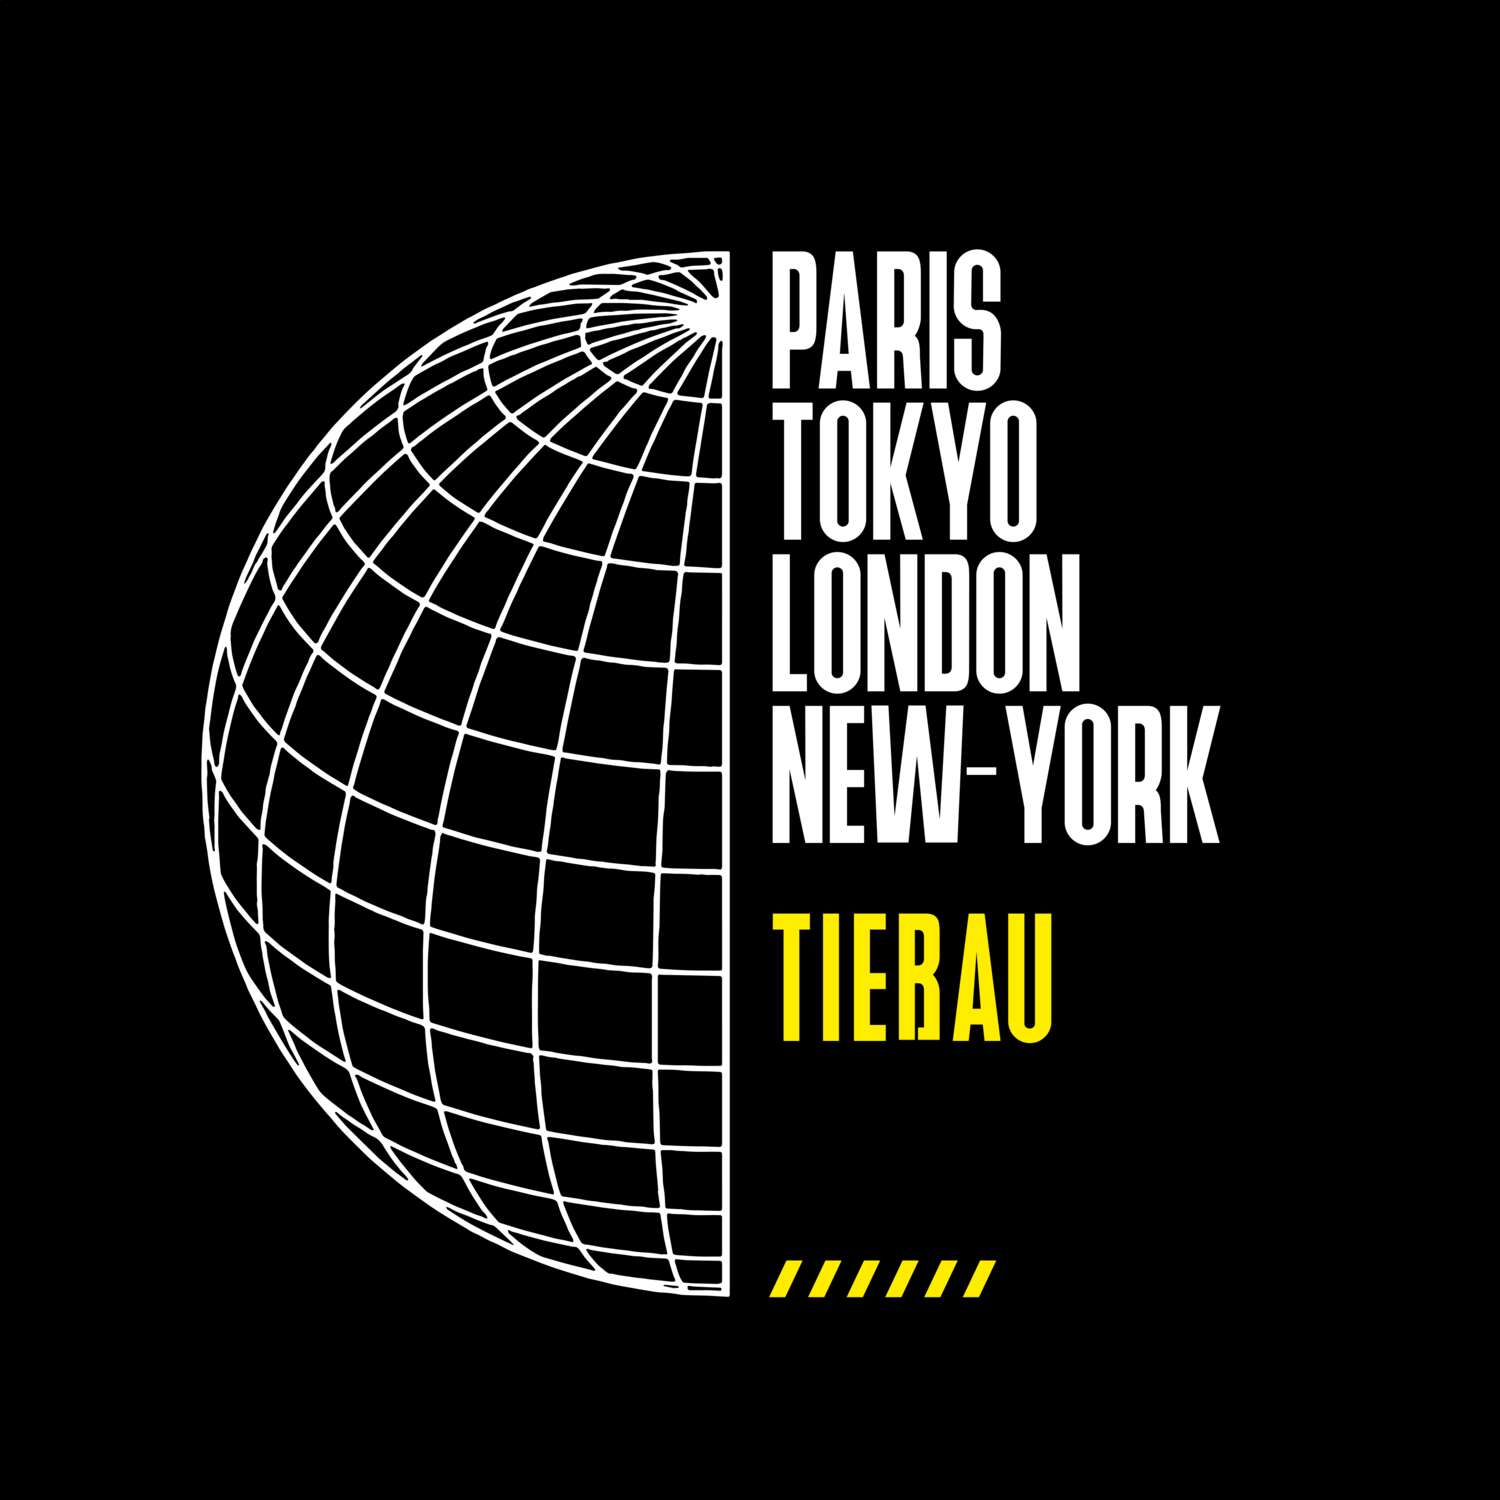 Tießau T-Shirt »Paris Tokyo London«